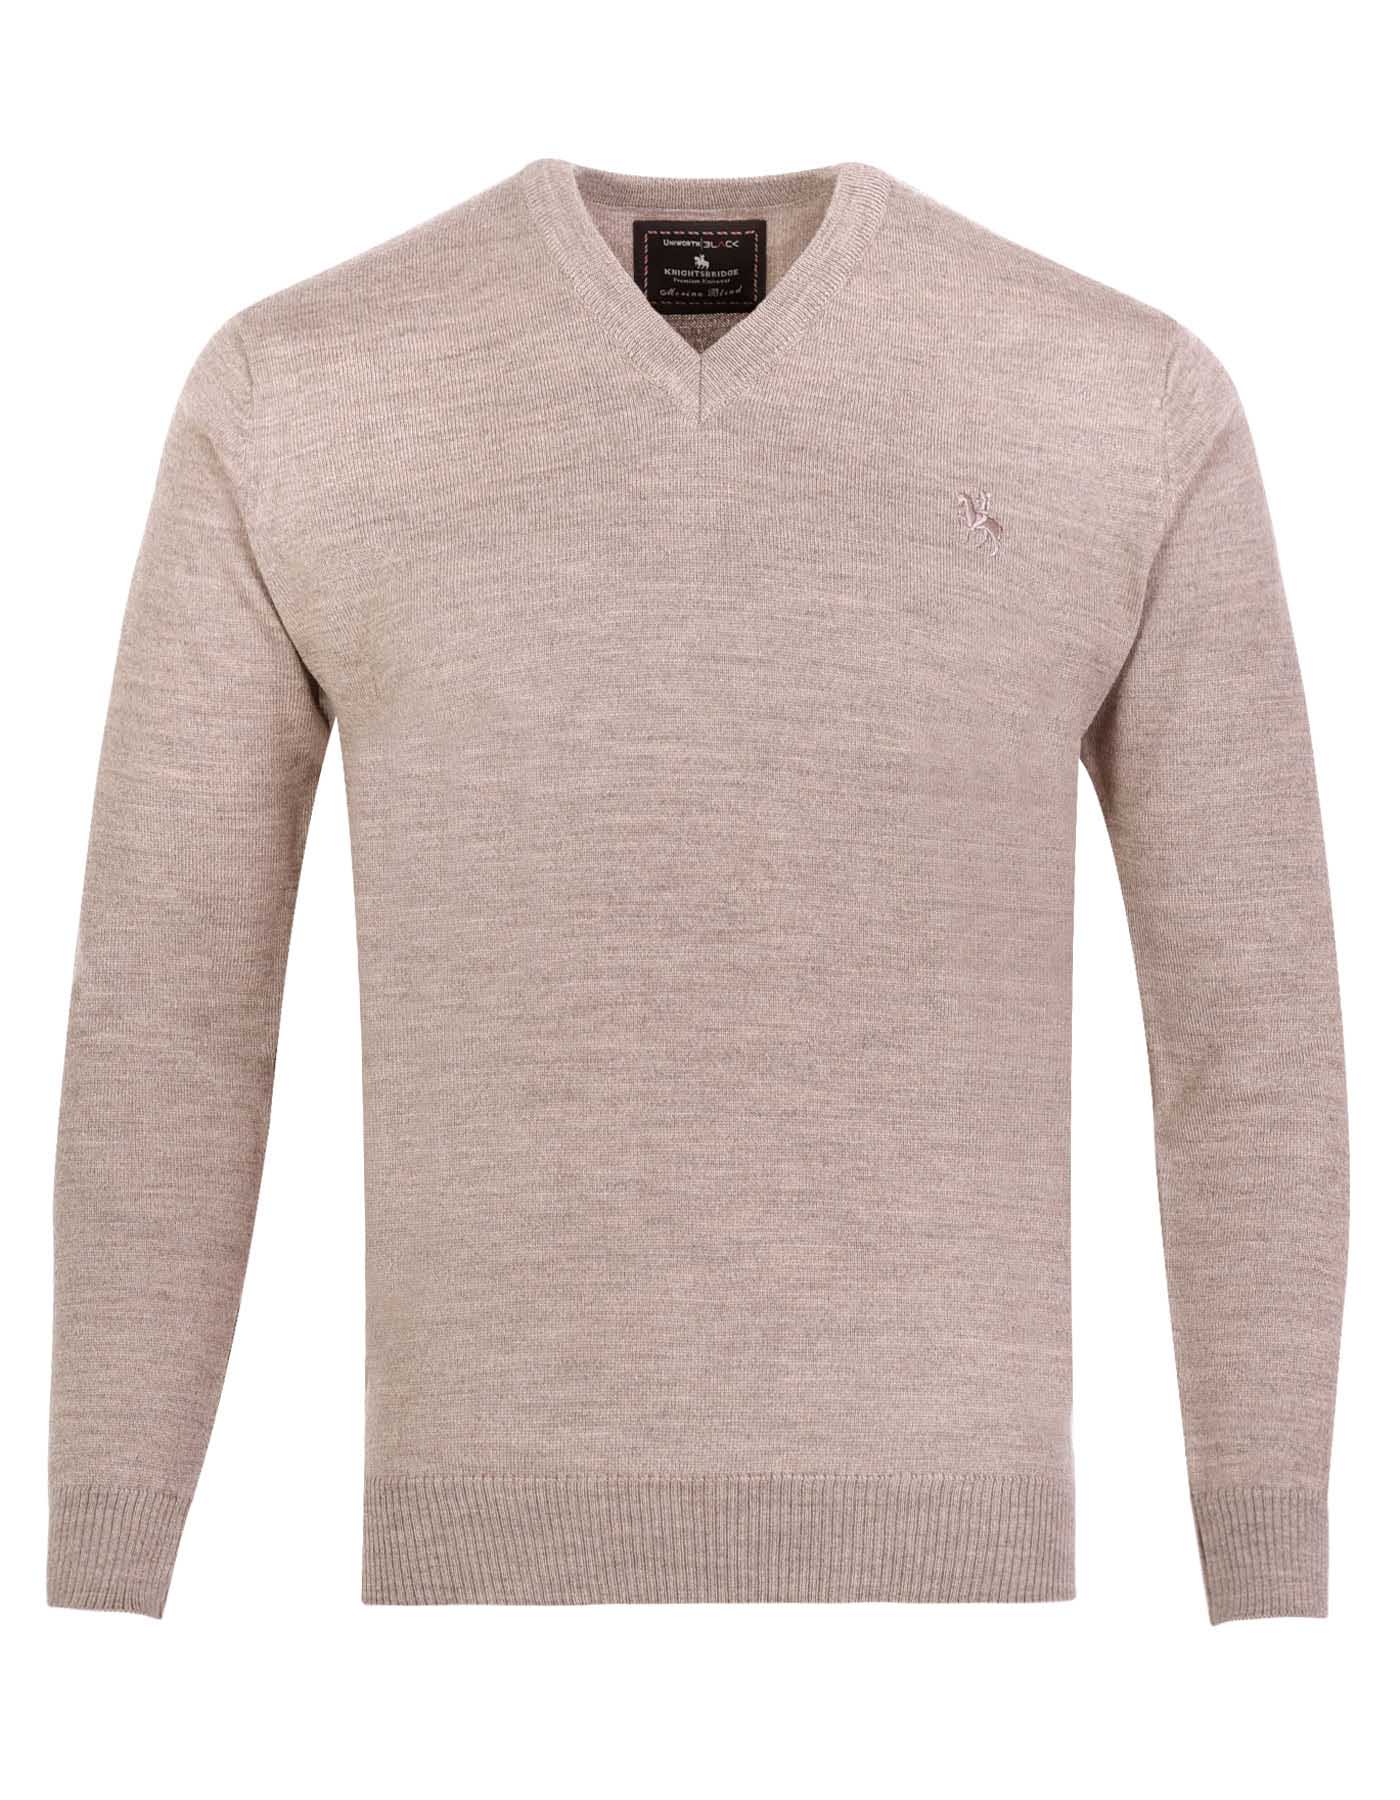 M Khaki Plain Full Sleeve Sweater